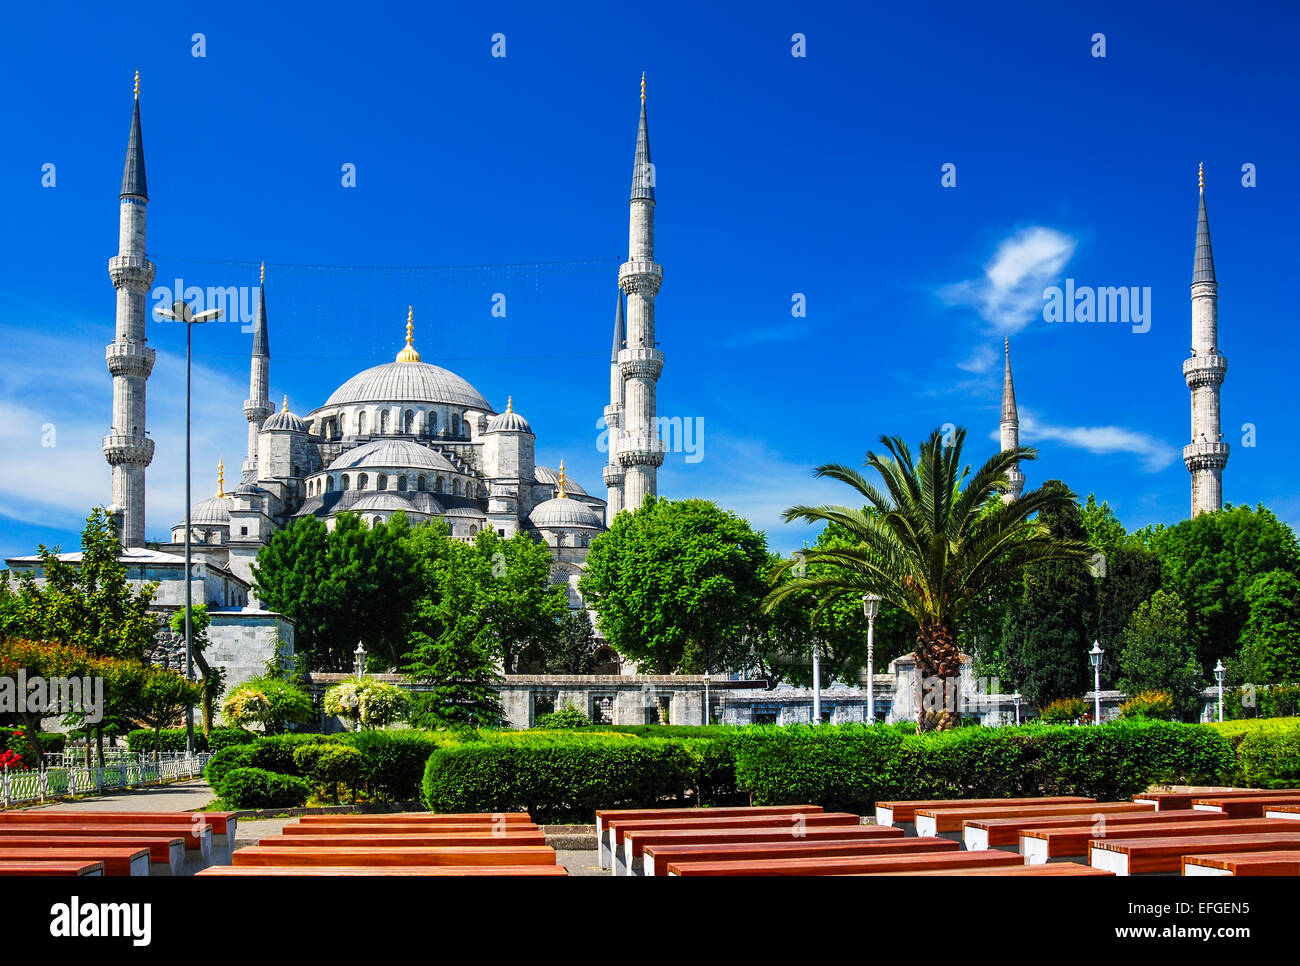 Istanbul, Turkey. Sultan Ahmet Camii named Blue Mosque turkish islamic landmark with six minarets, main attraction of the city. Stock Photo